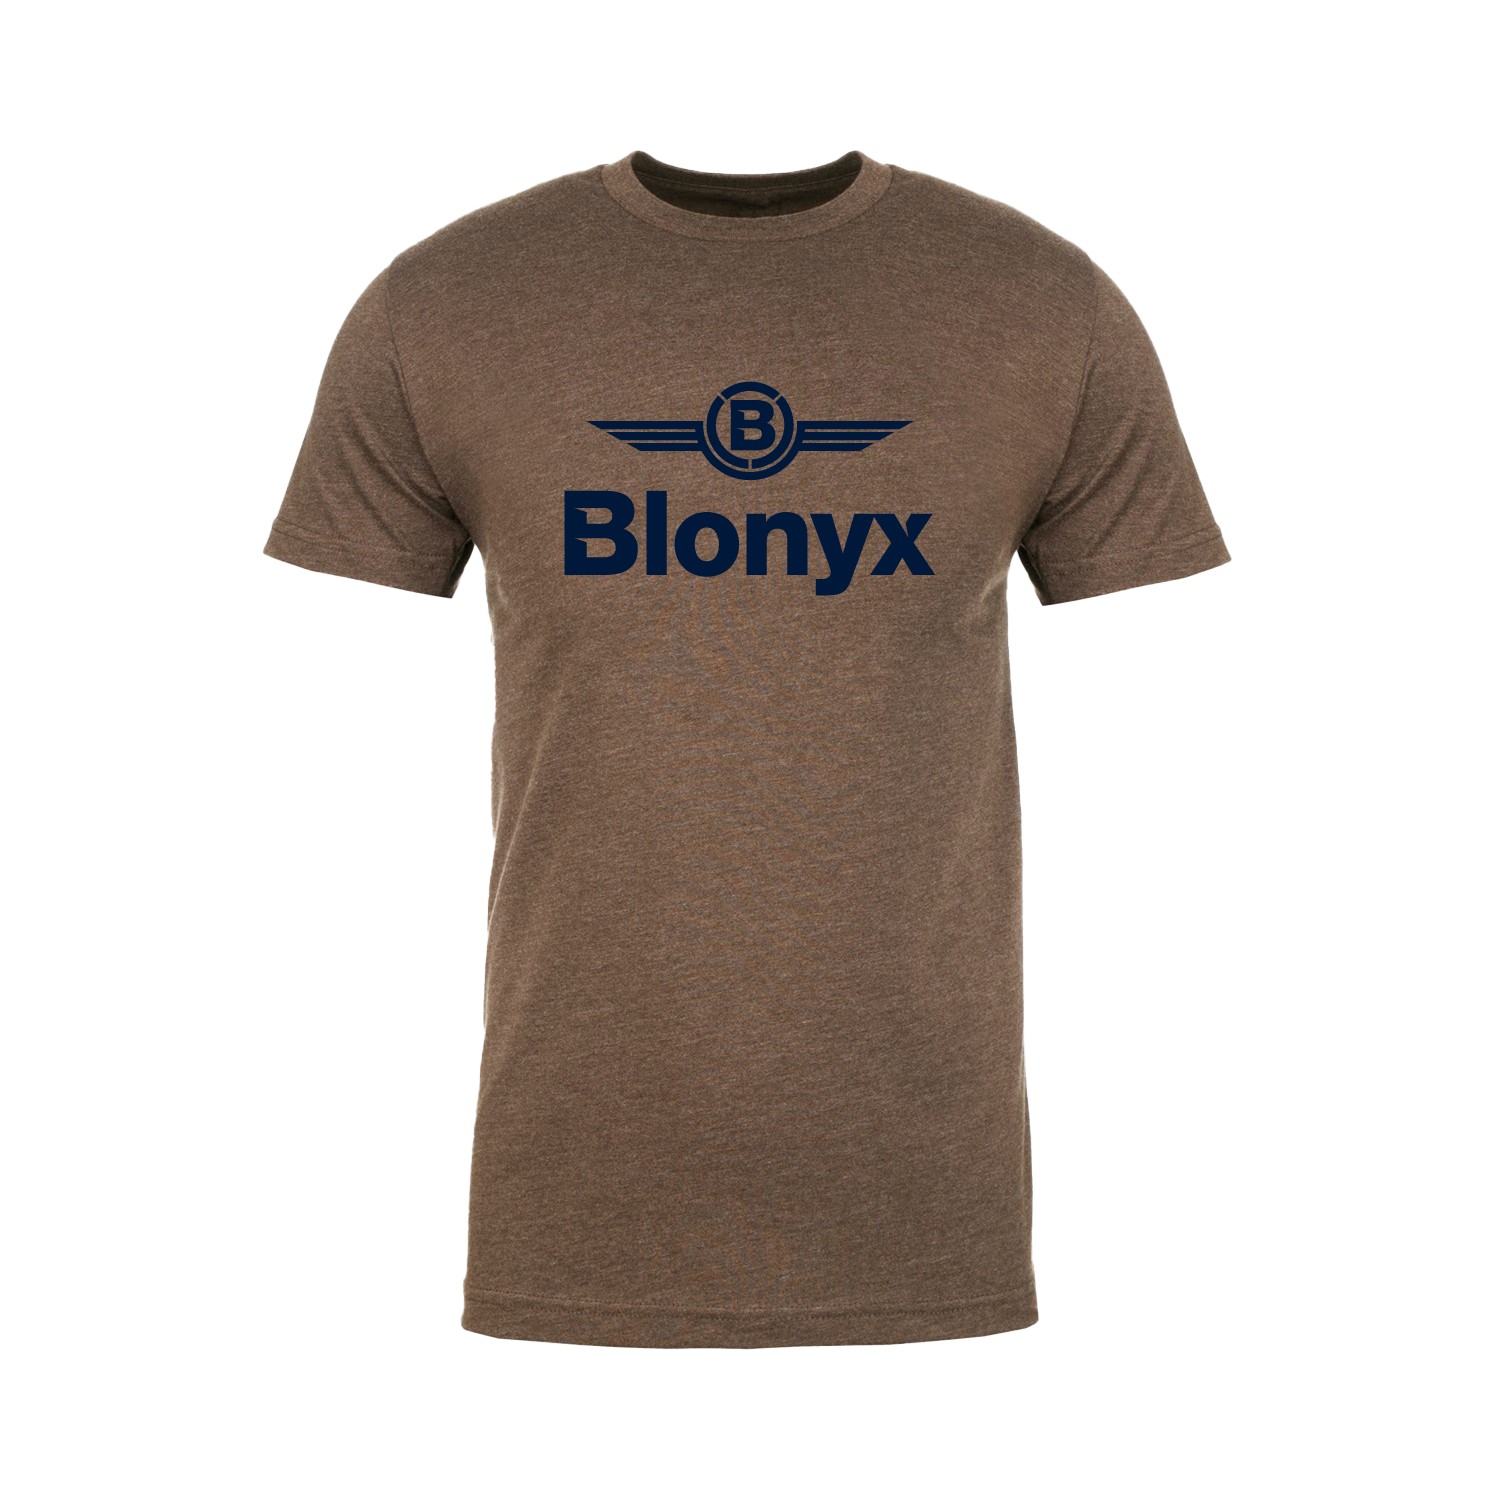 Blonyx S20 Men's Shirt